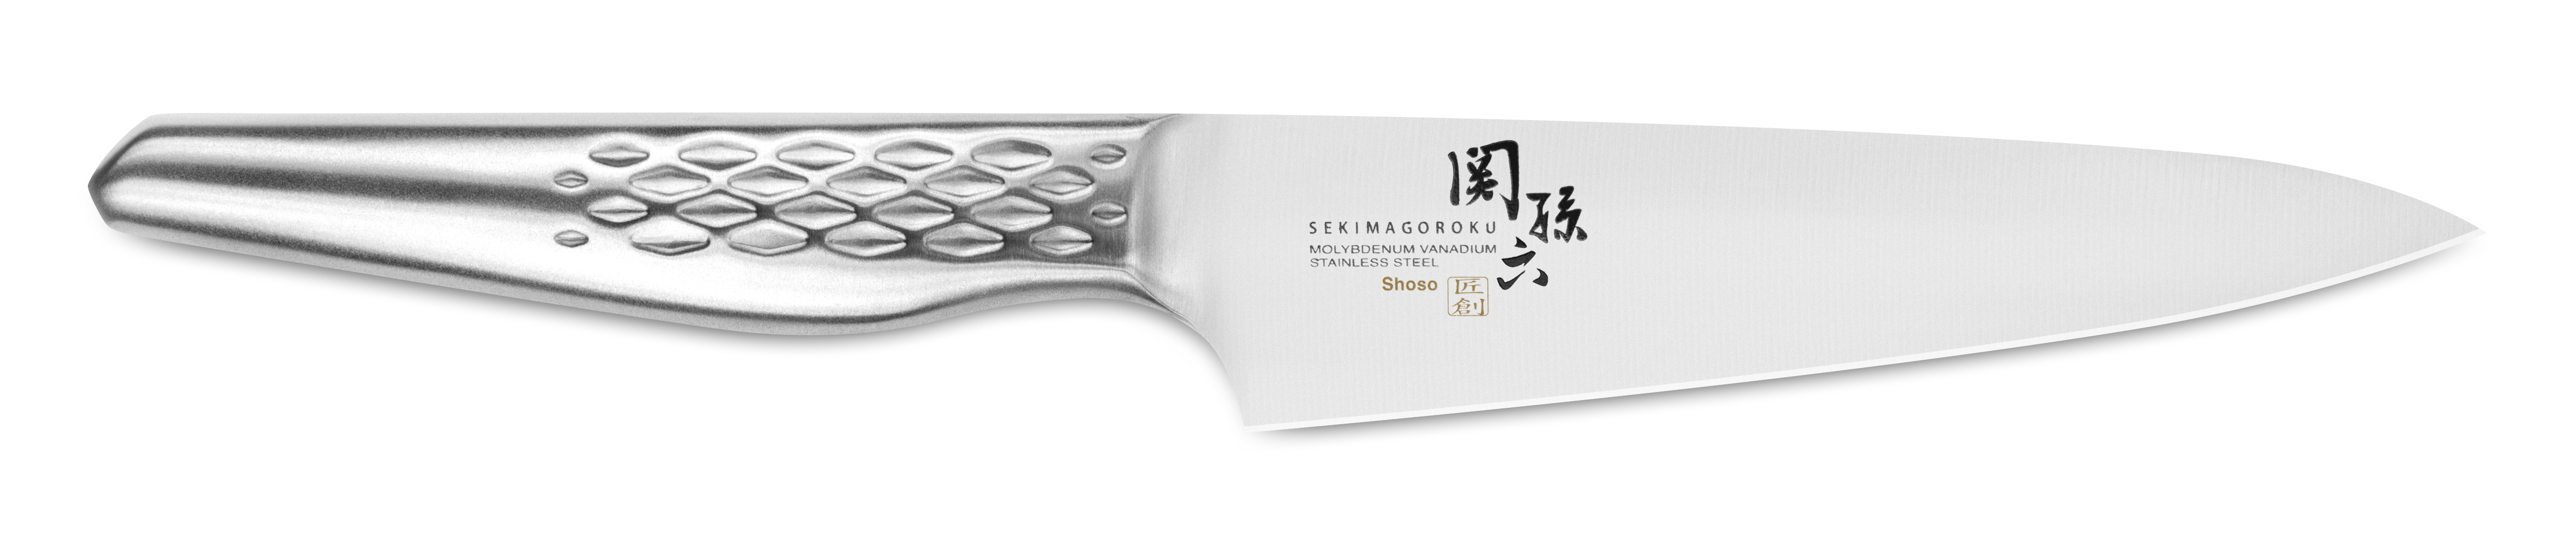 Seki Magoroku Shoso – Allzweckmesser 12 cm – AB-5163